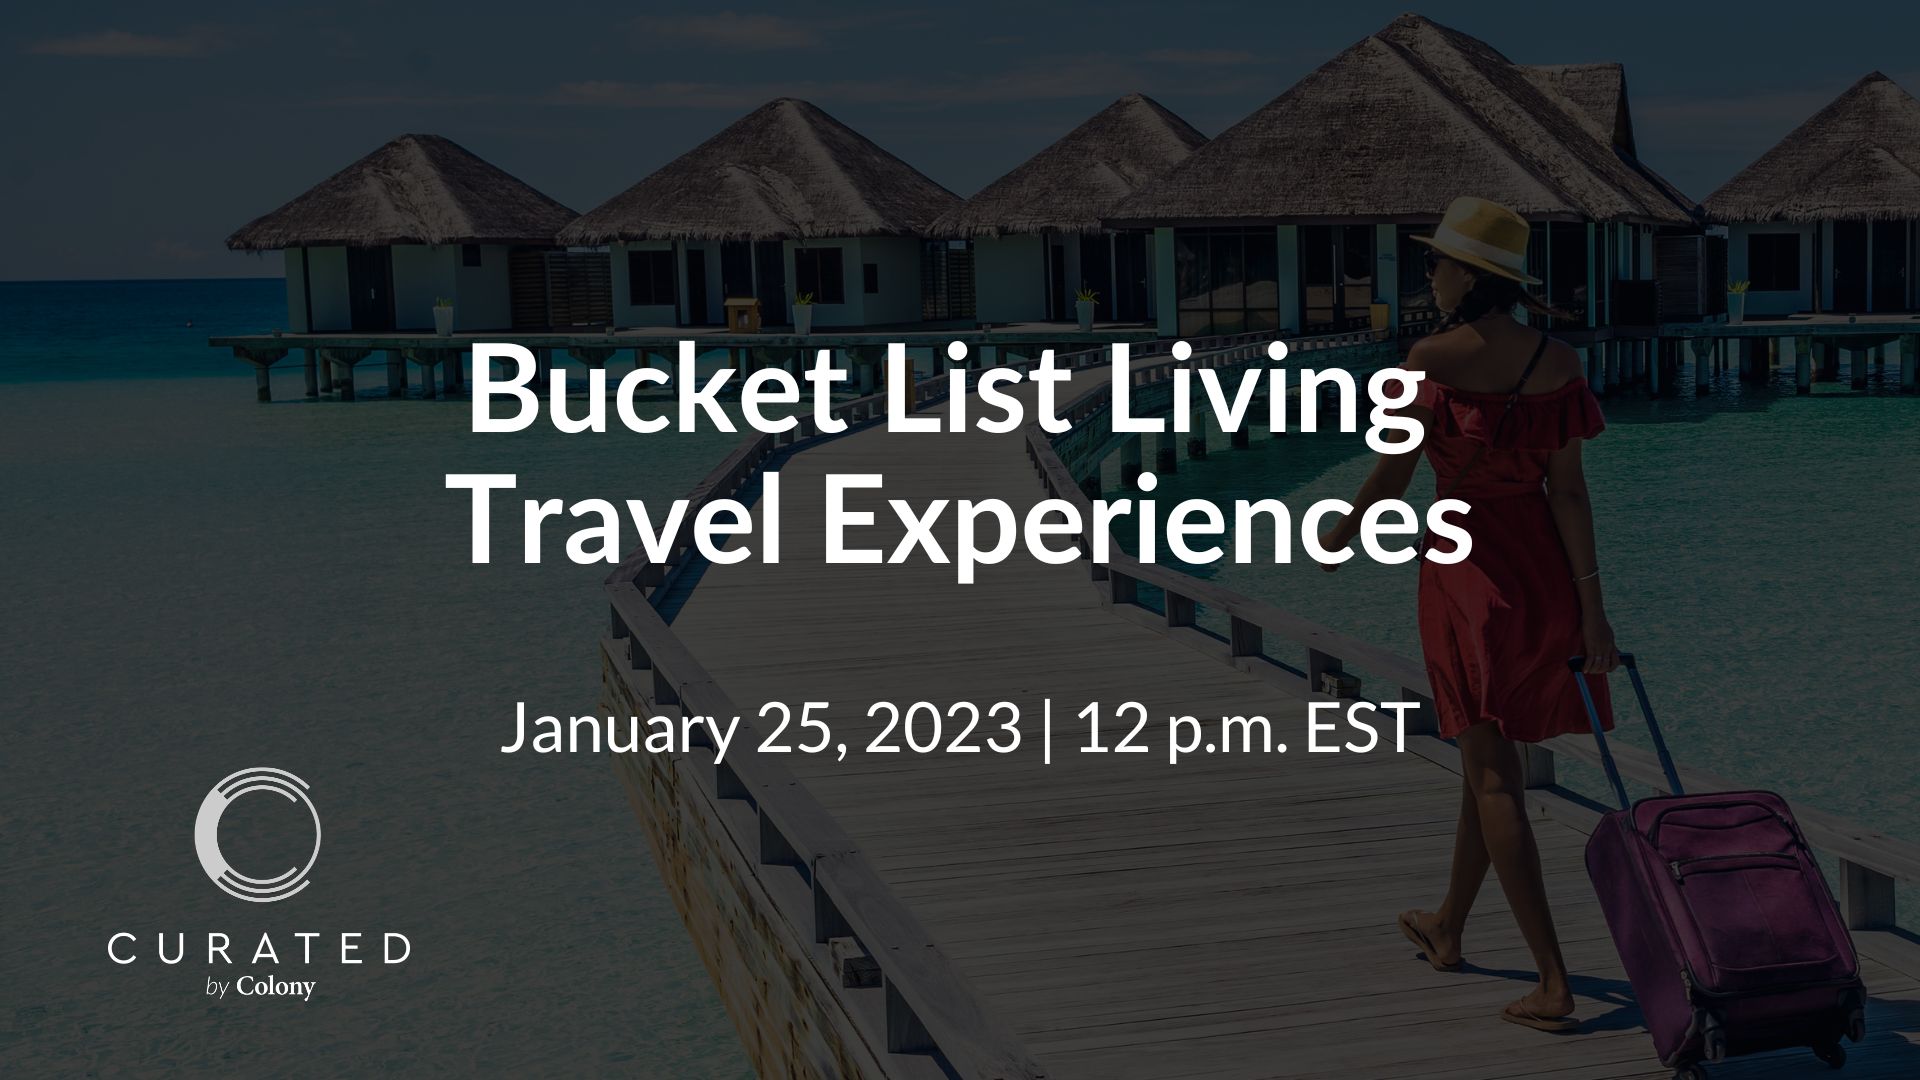 Bucket list living travel experiences